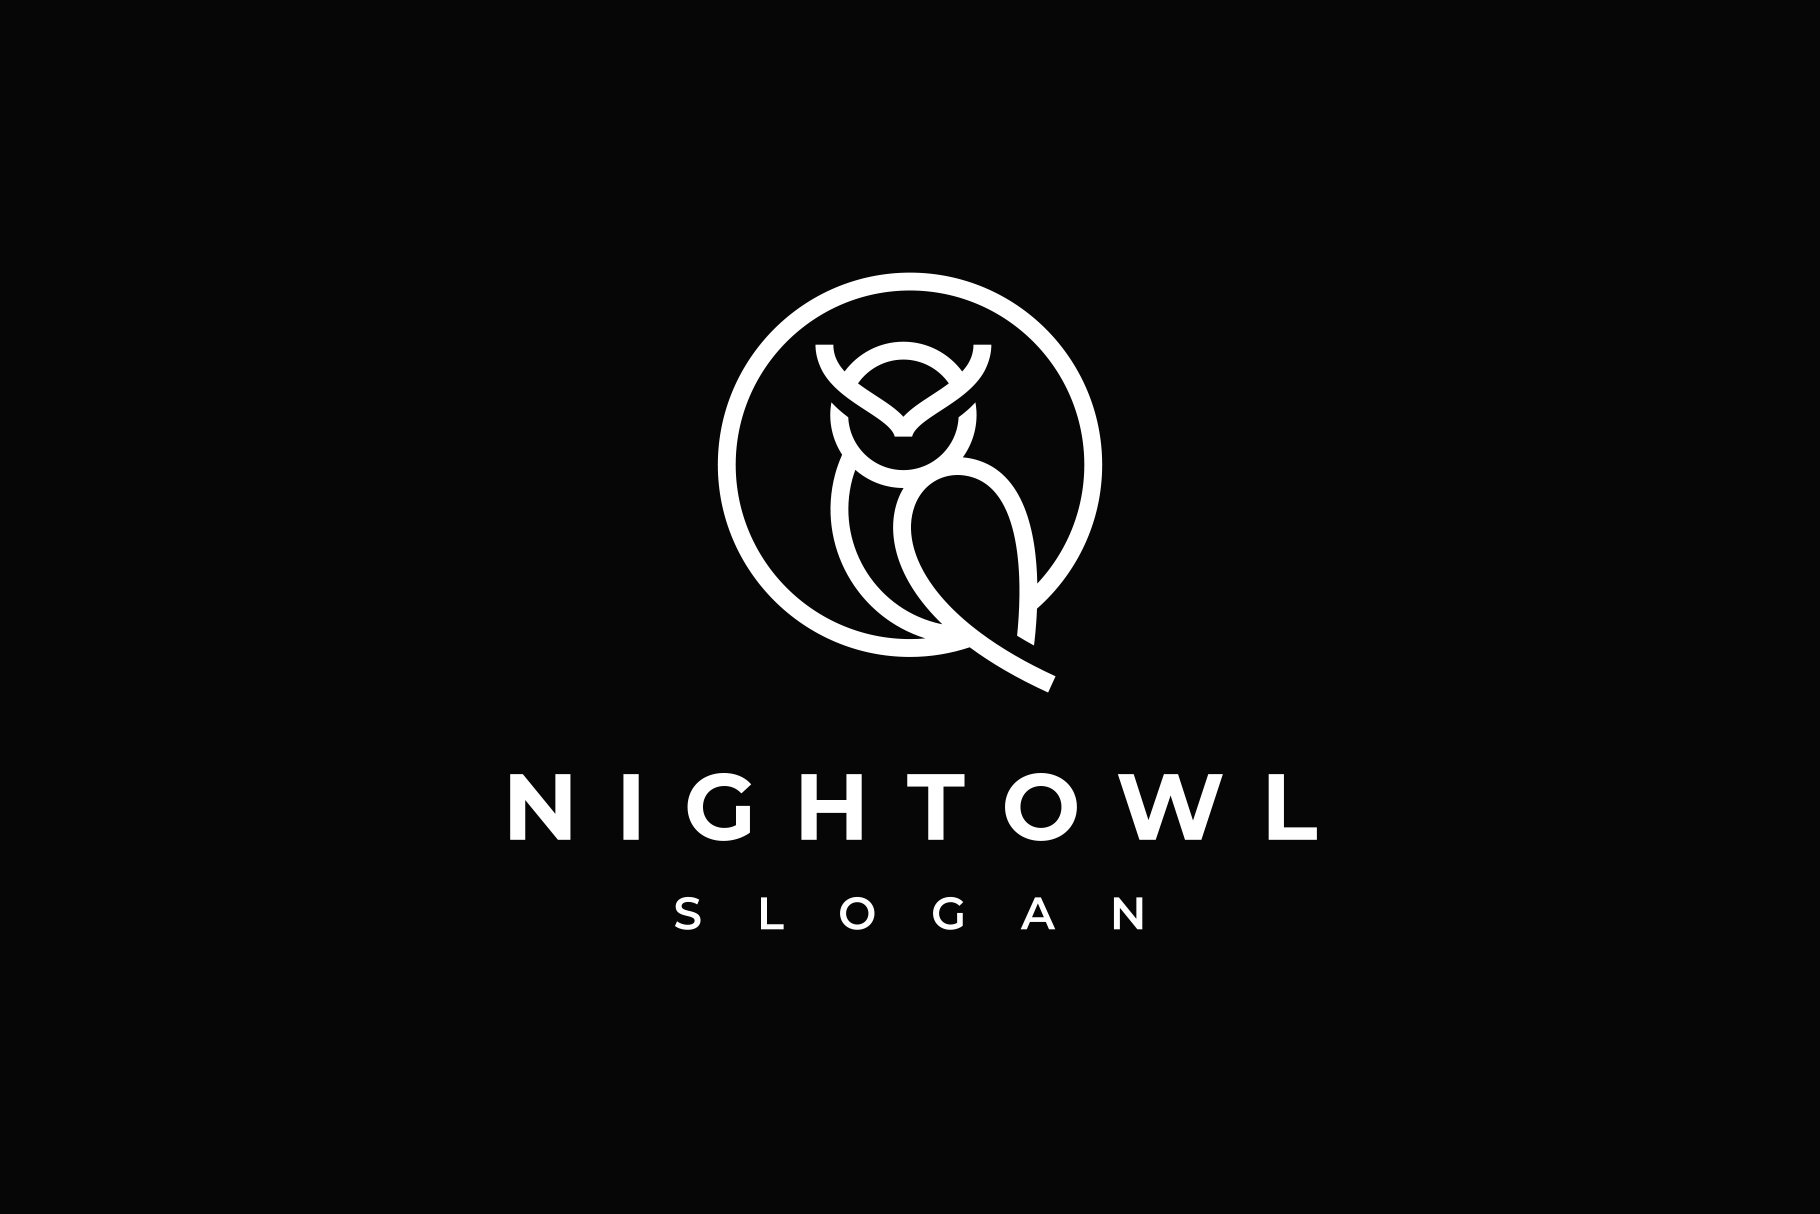 Night Owl Logo - Smart Wisdom Wise cover image.